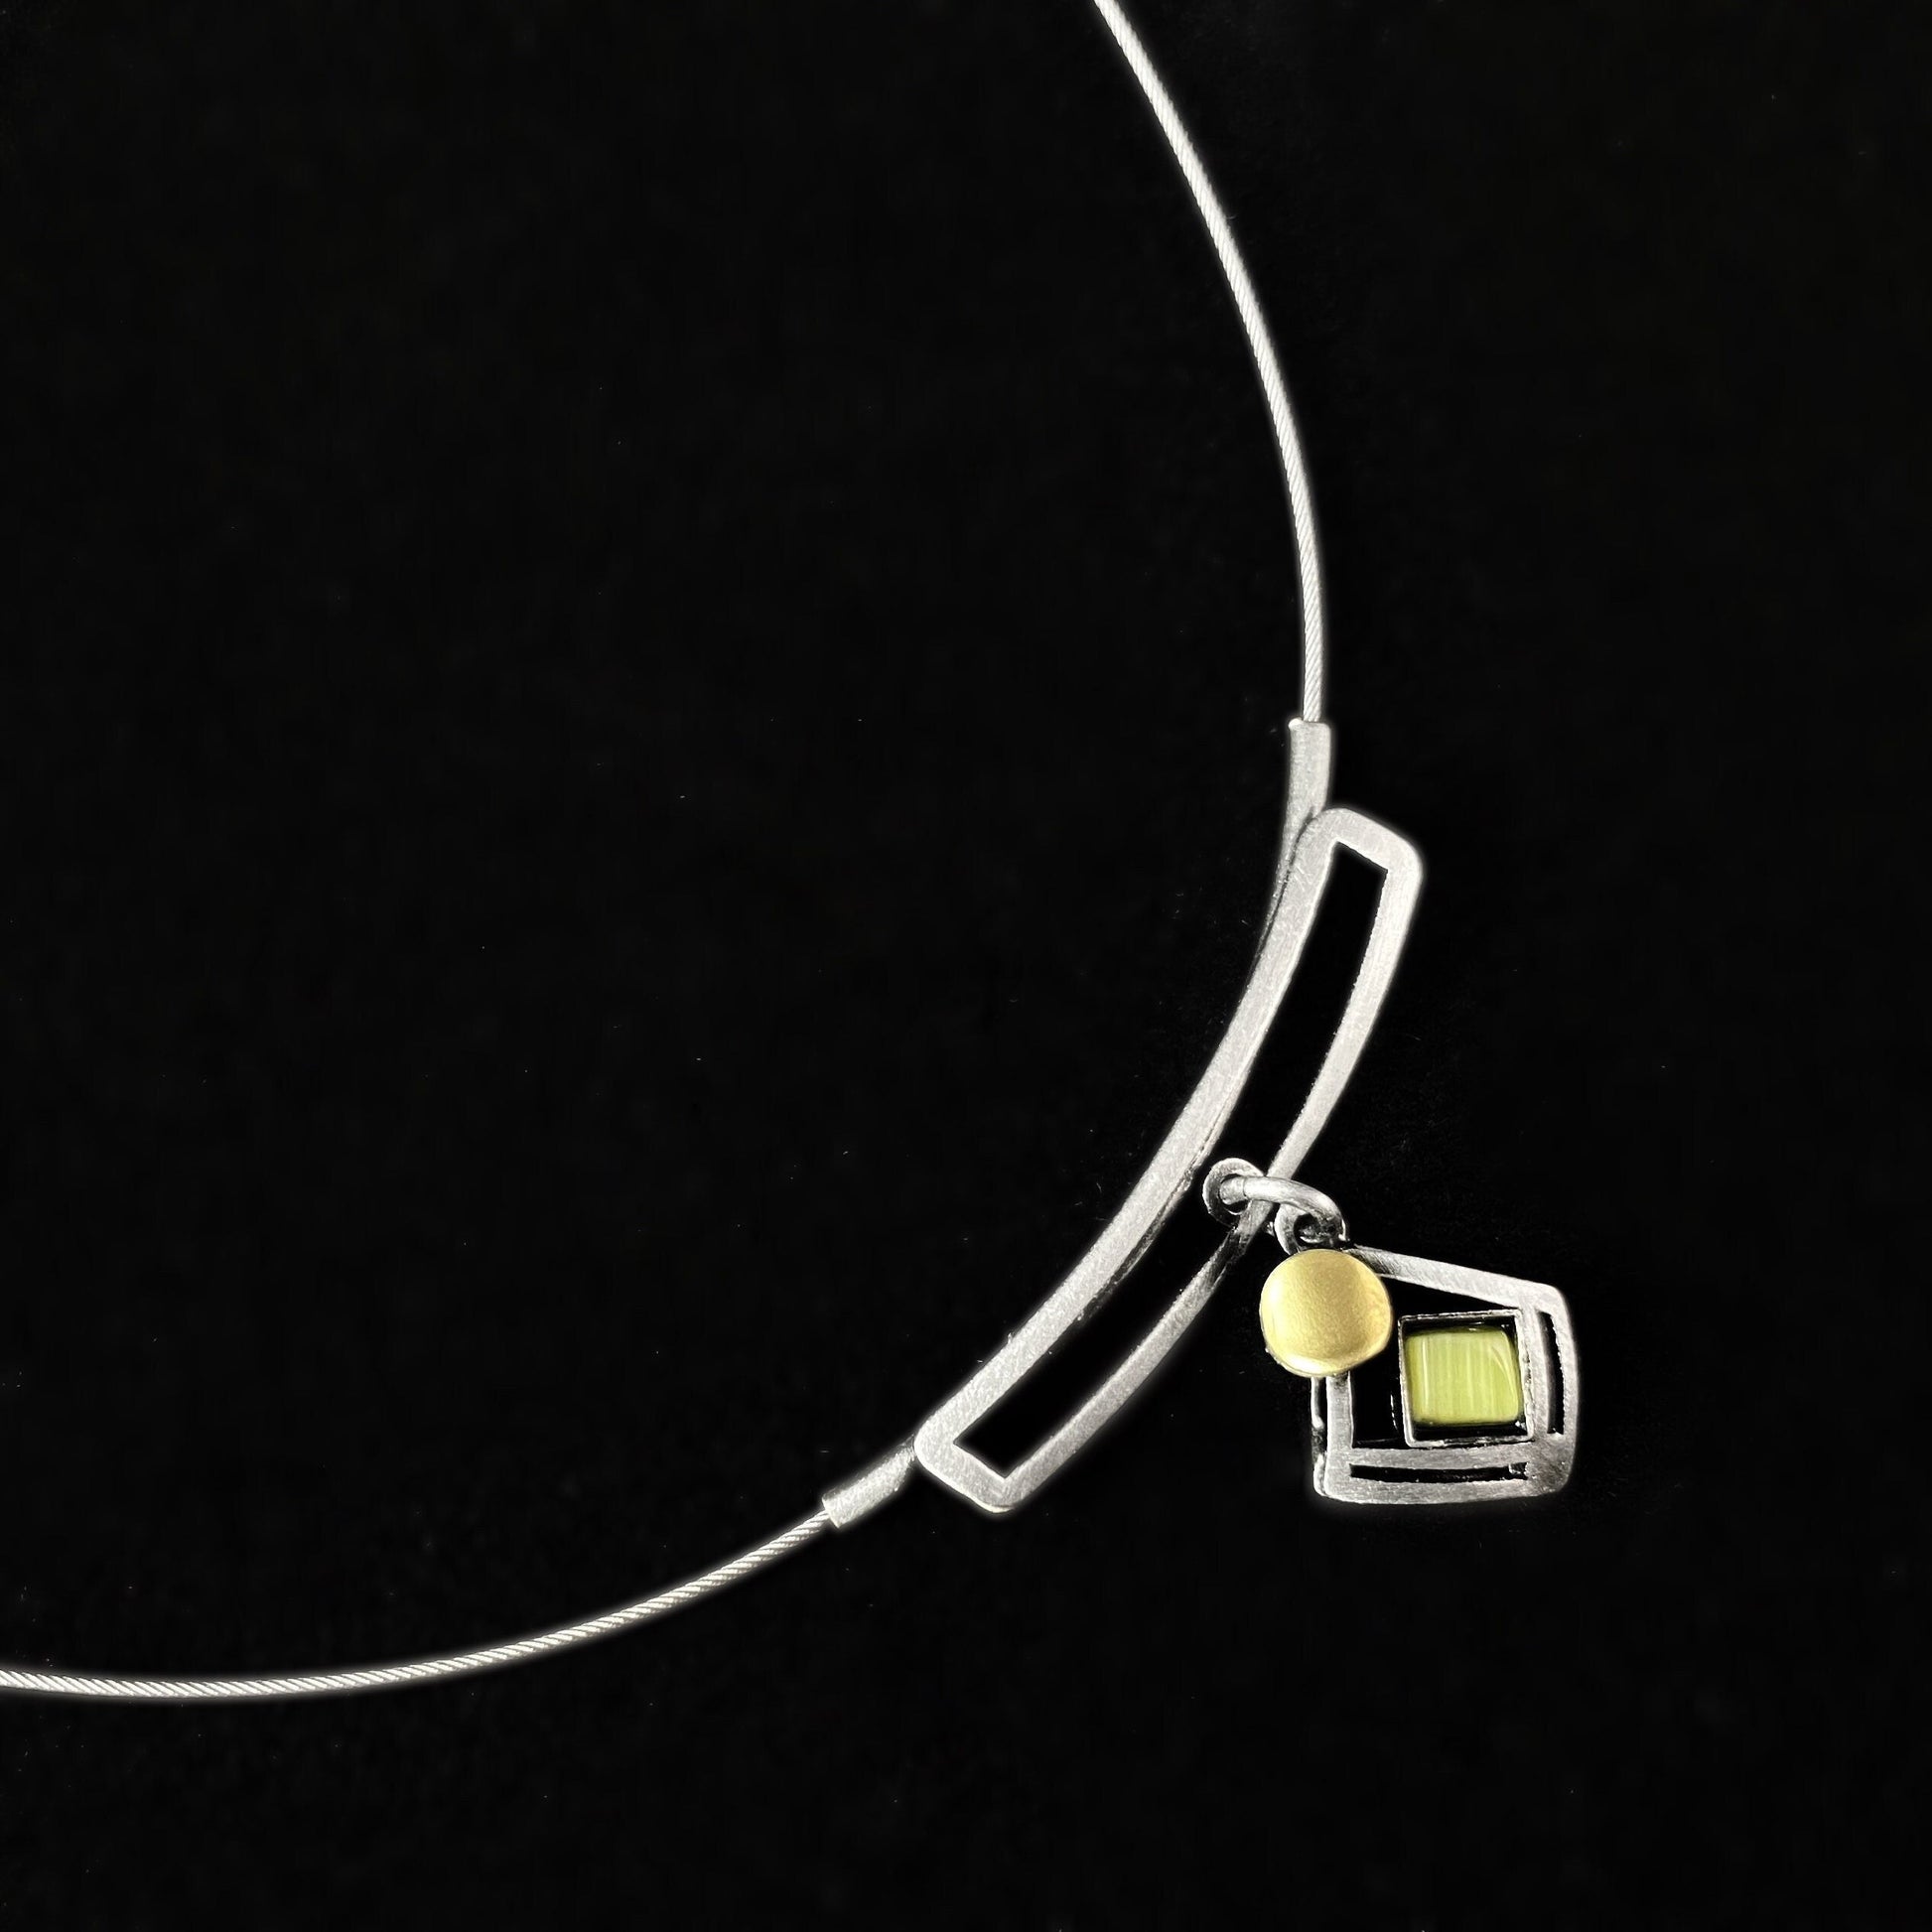 Lightweight Handmade Geometric Aluminum Necklace, Small Silver/Green Square